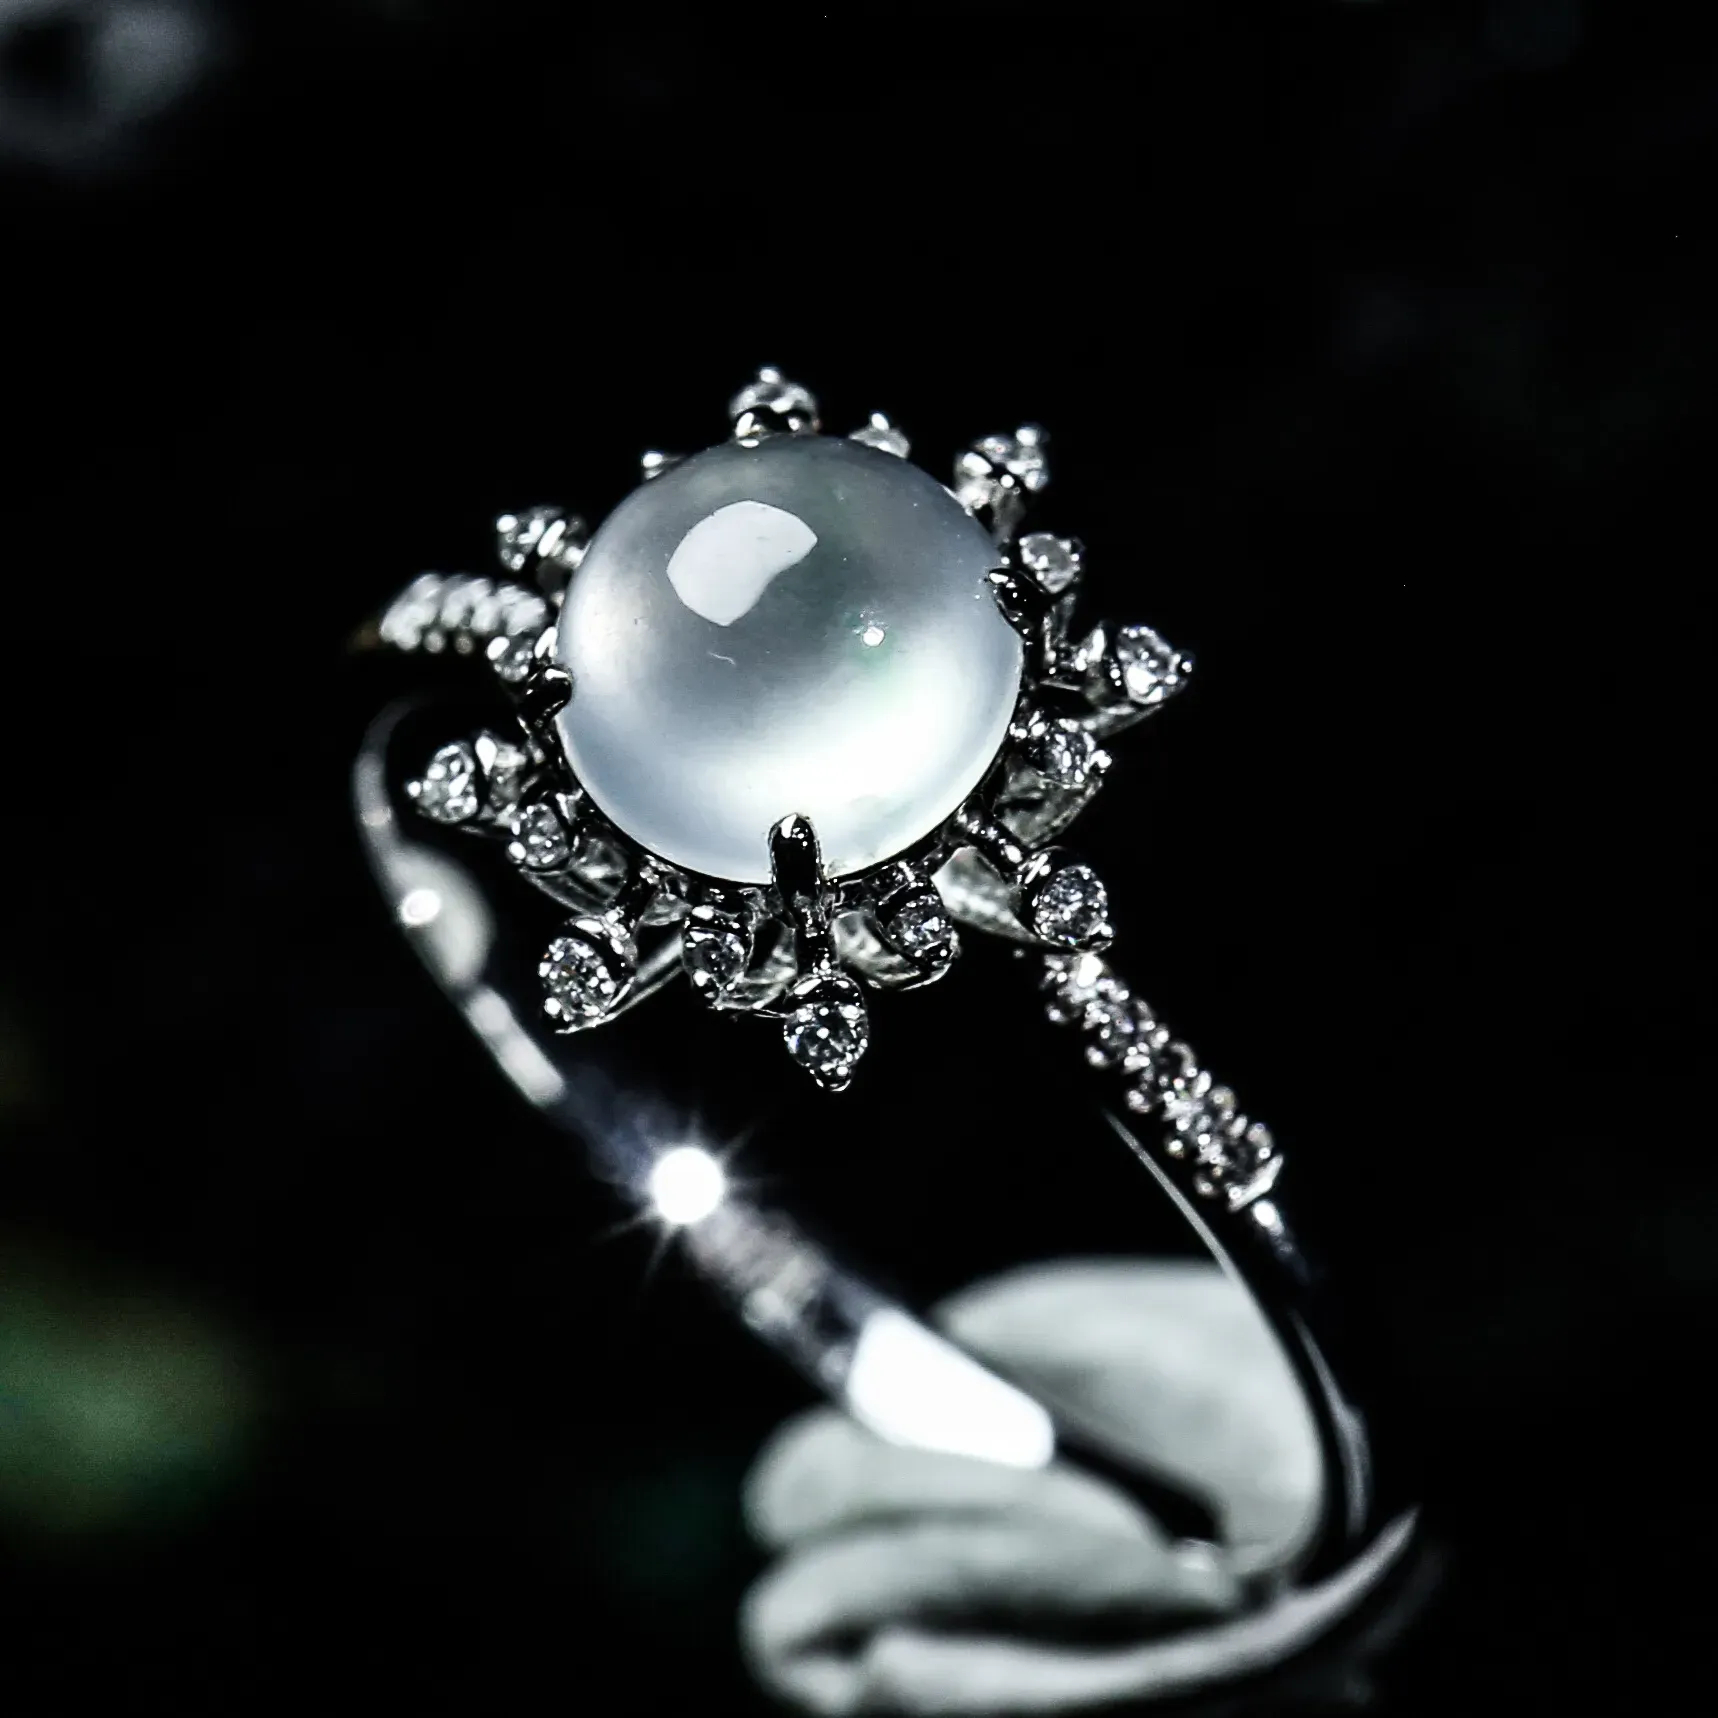 18K金镶嵌伴钻蛋面翡翠戒指，冰透水润，款式精美，上手效果时尚漂亮！尺寸17.2*10.8*7.9mm